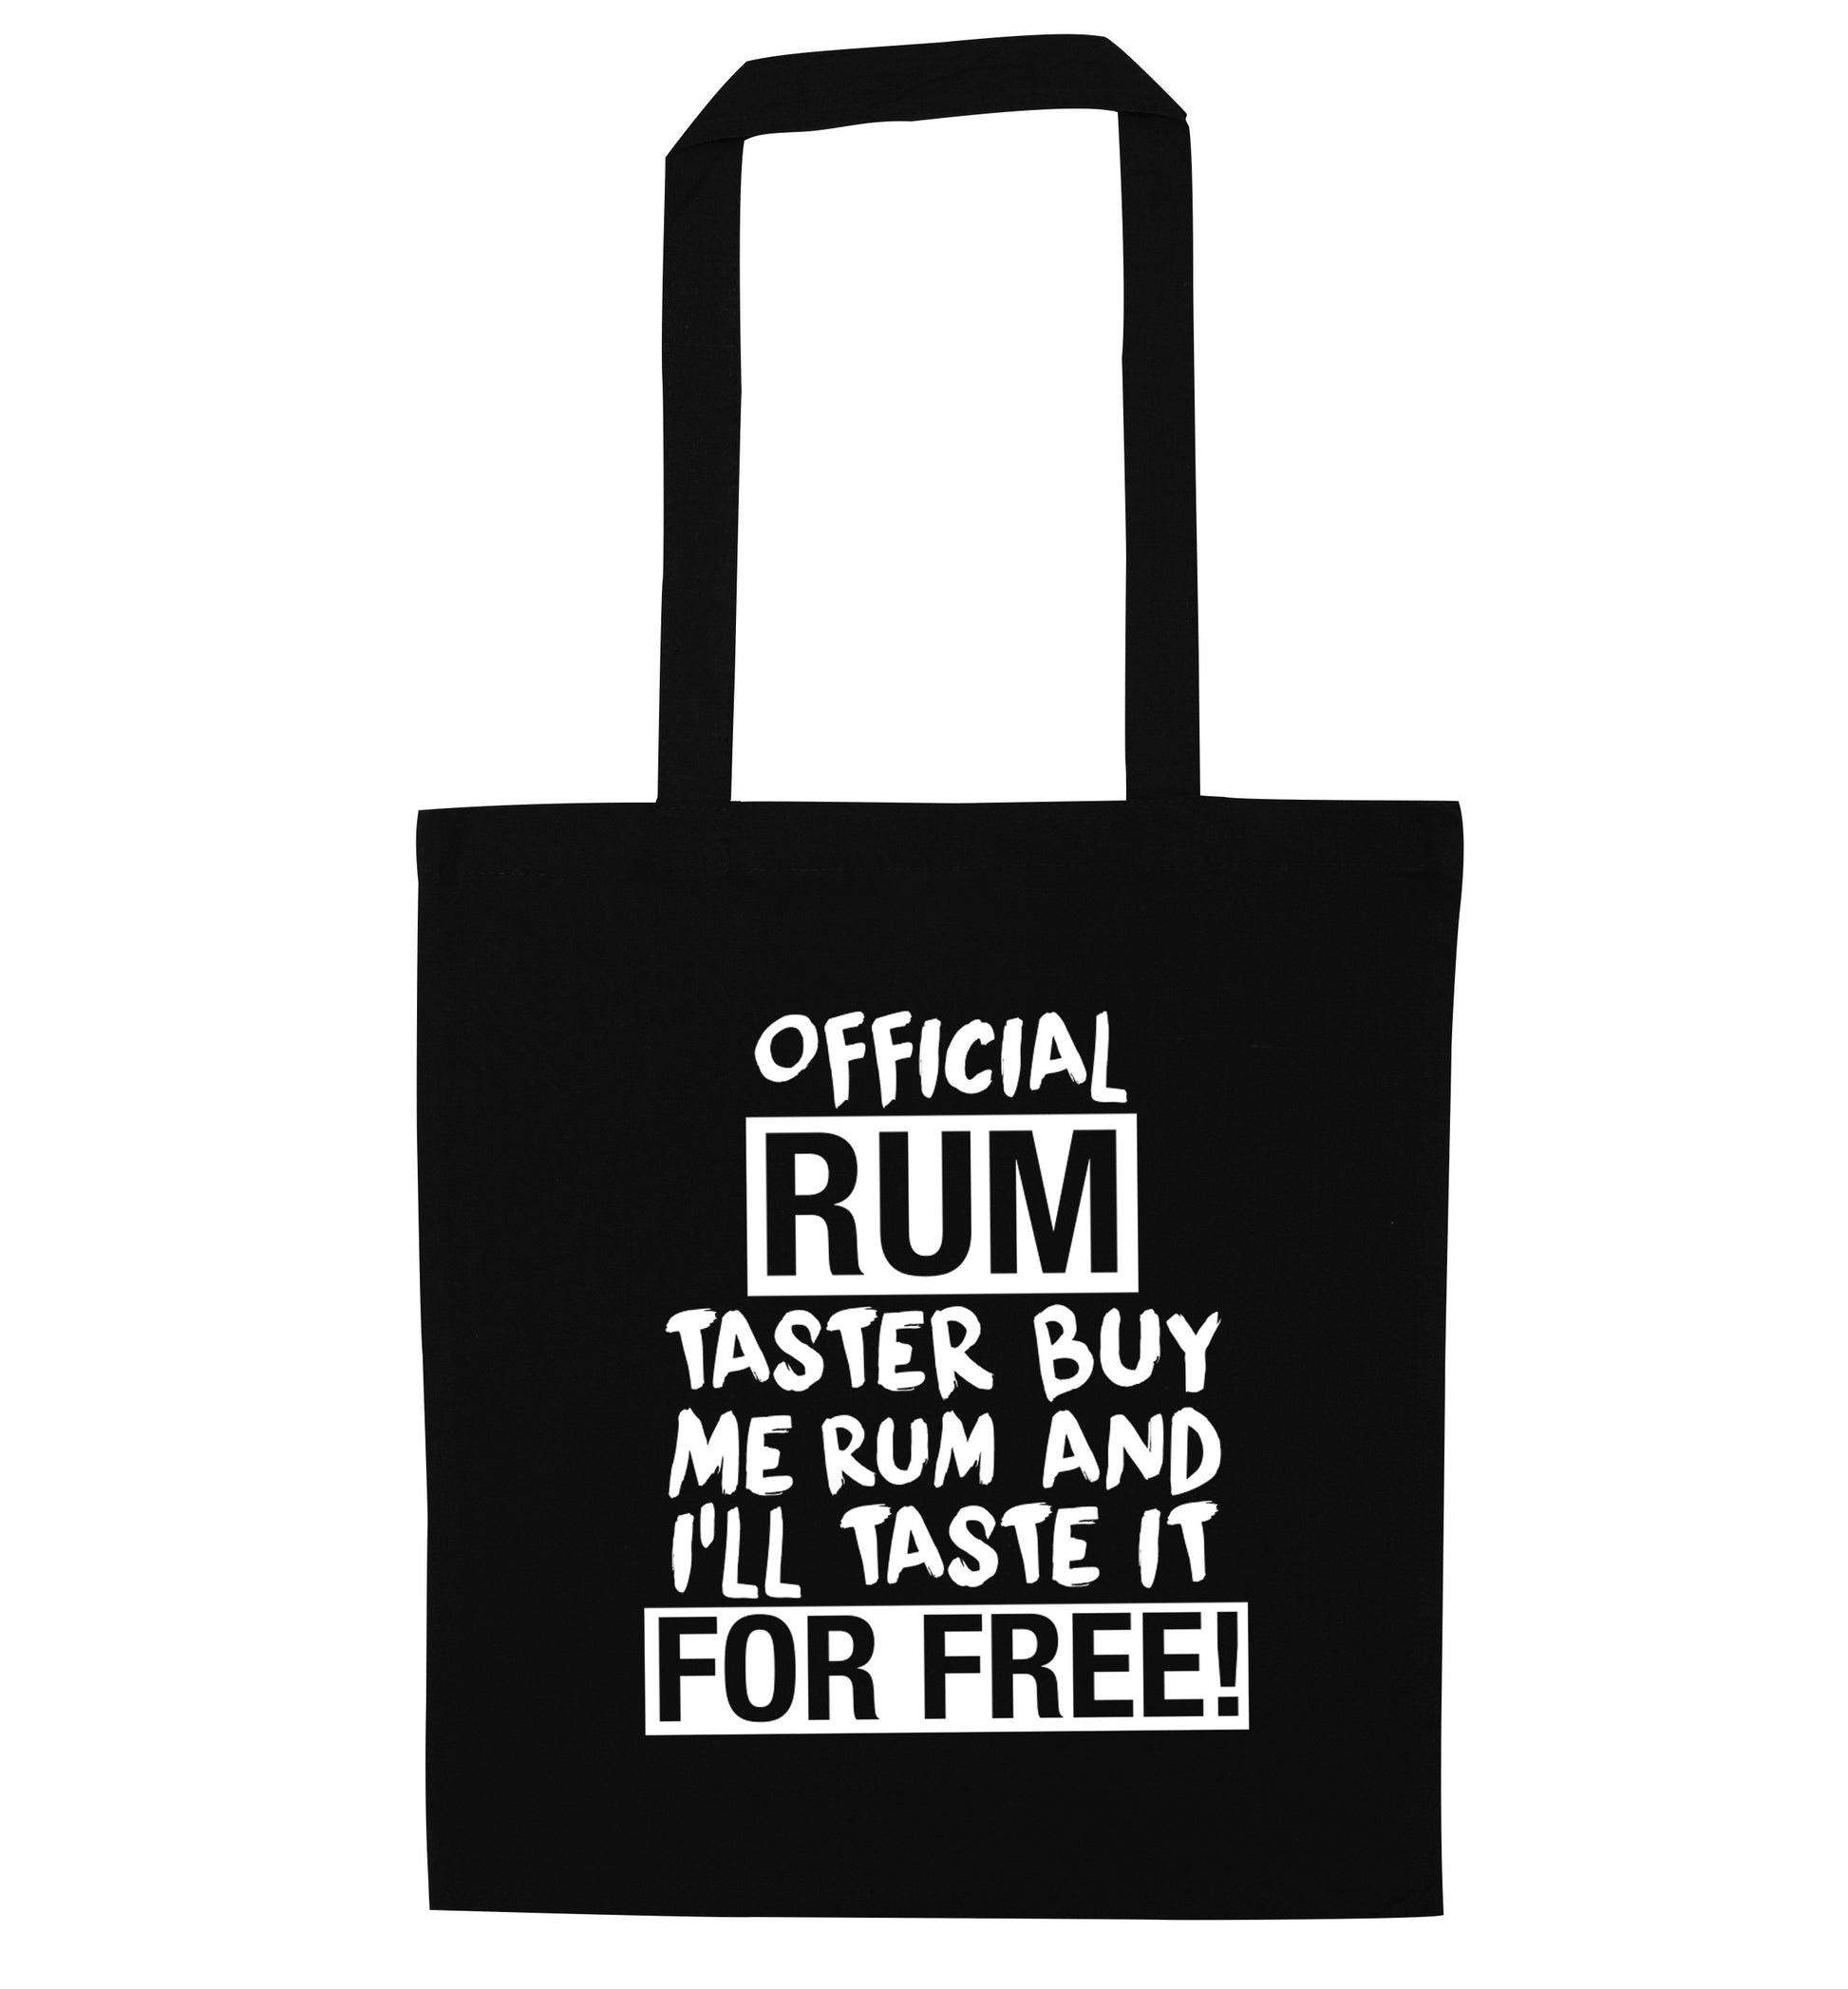 Official rum taster buy me rum and I'll taste it for free black tote bag